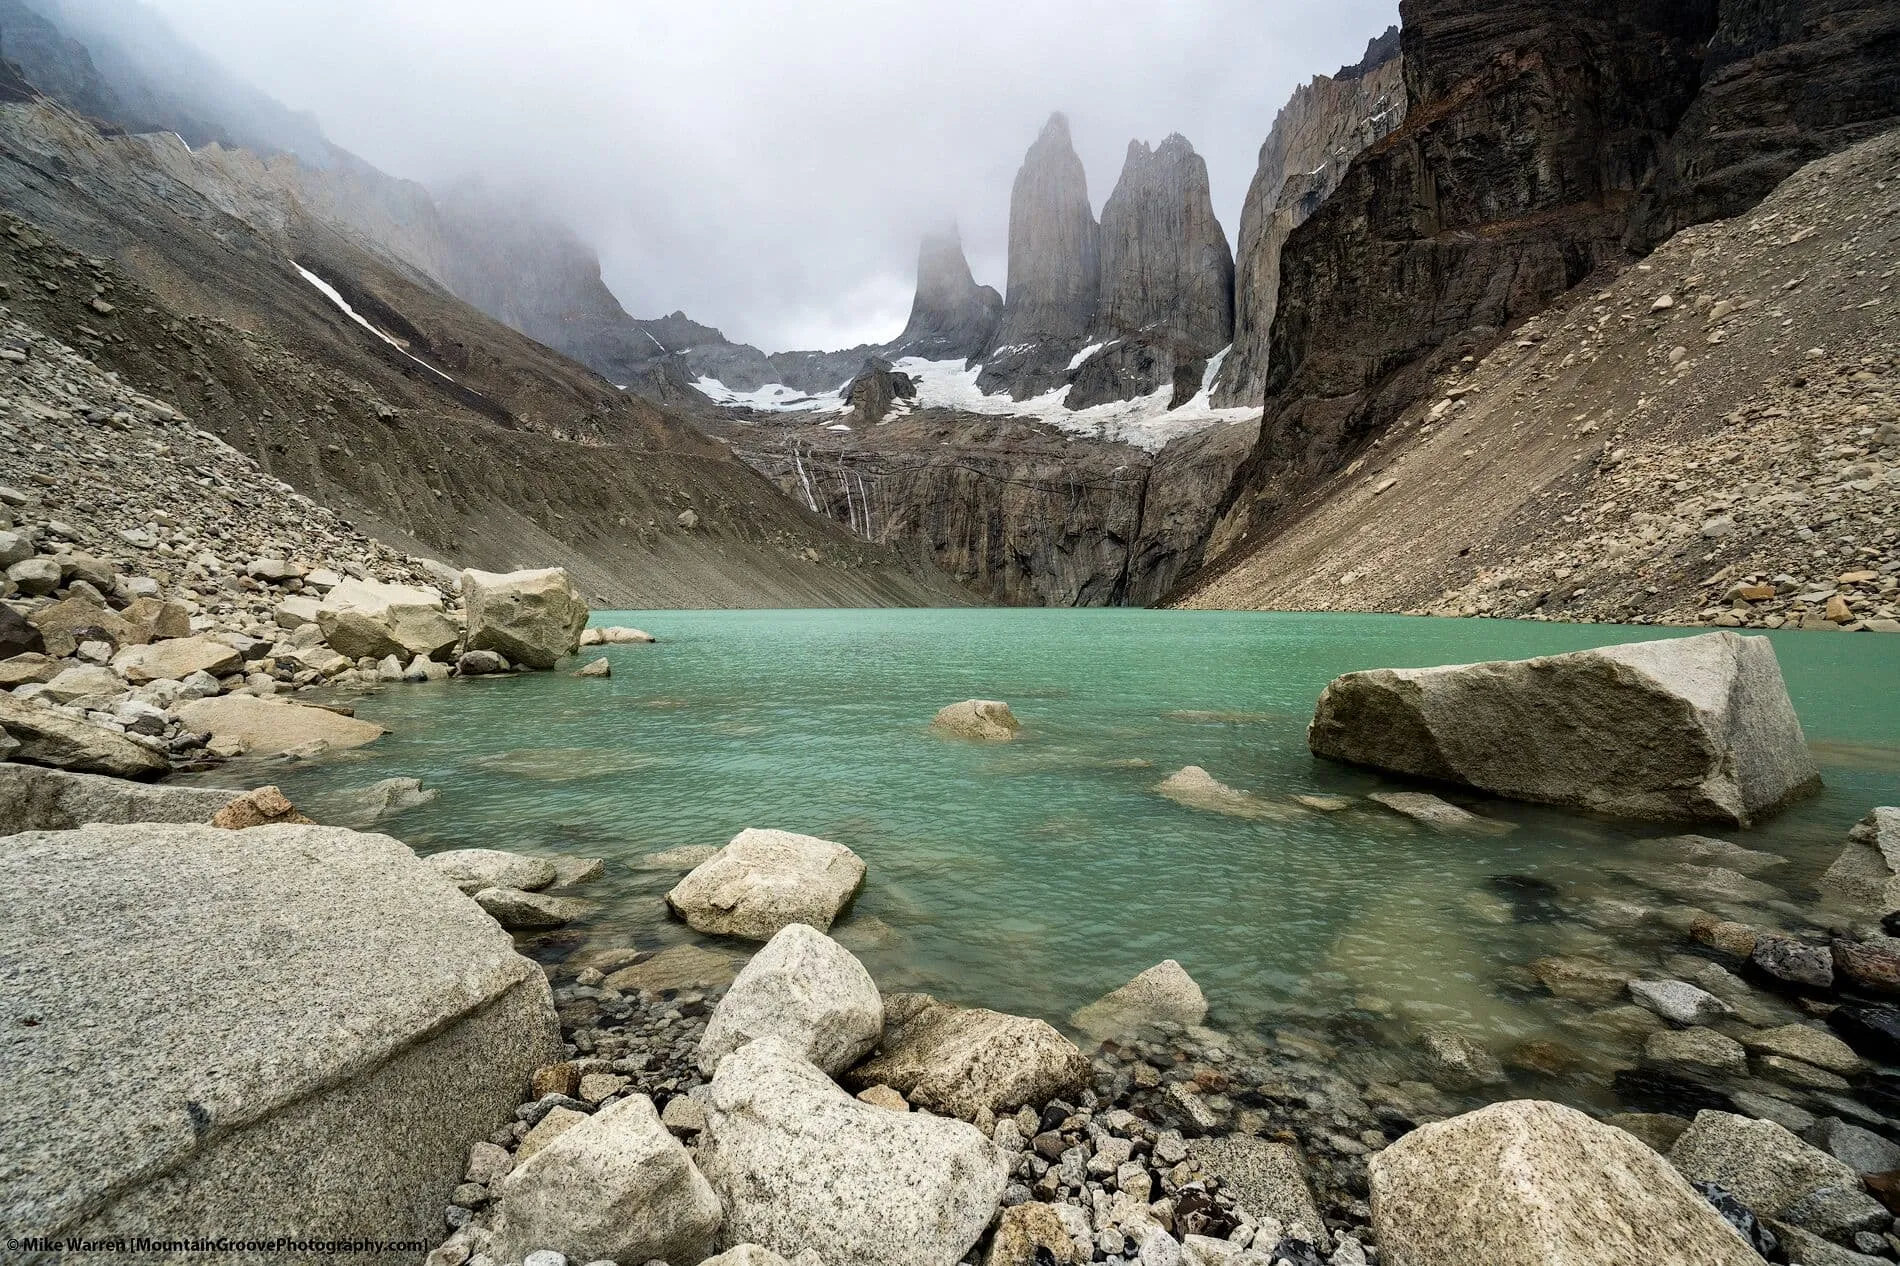 Trekking in Argentinean Patagonia - Los Glaciares